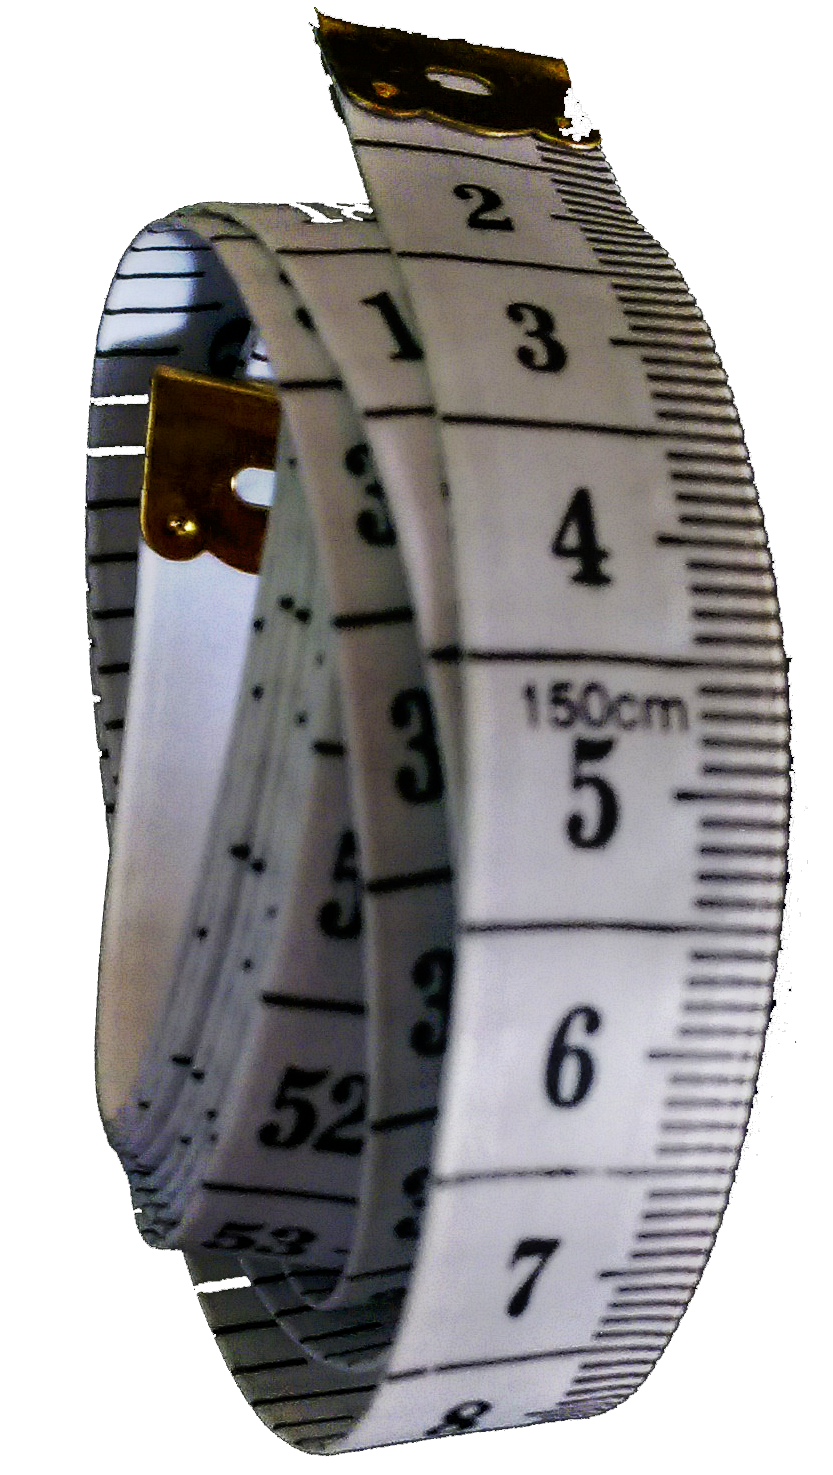 tape-measure